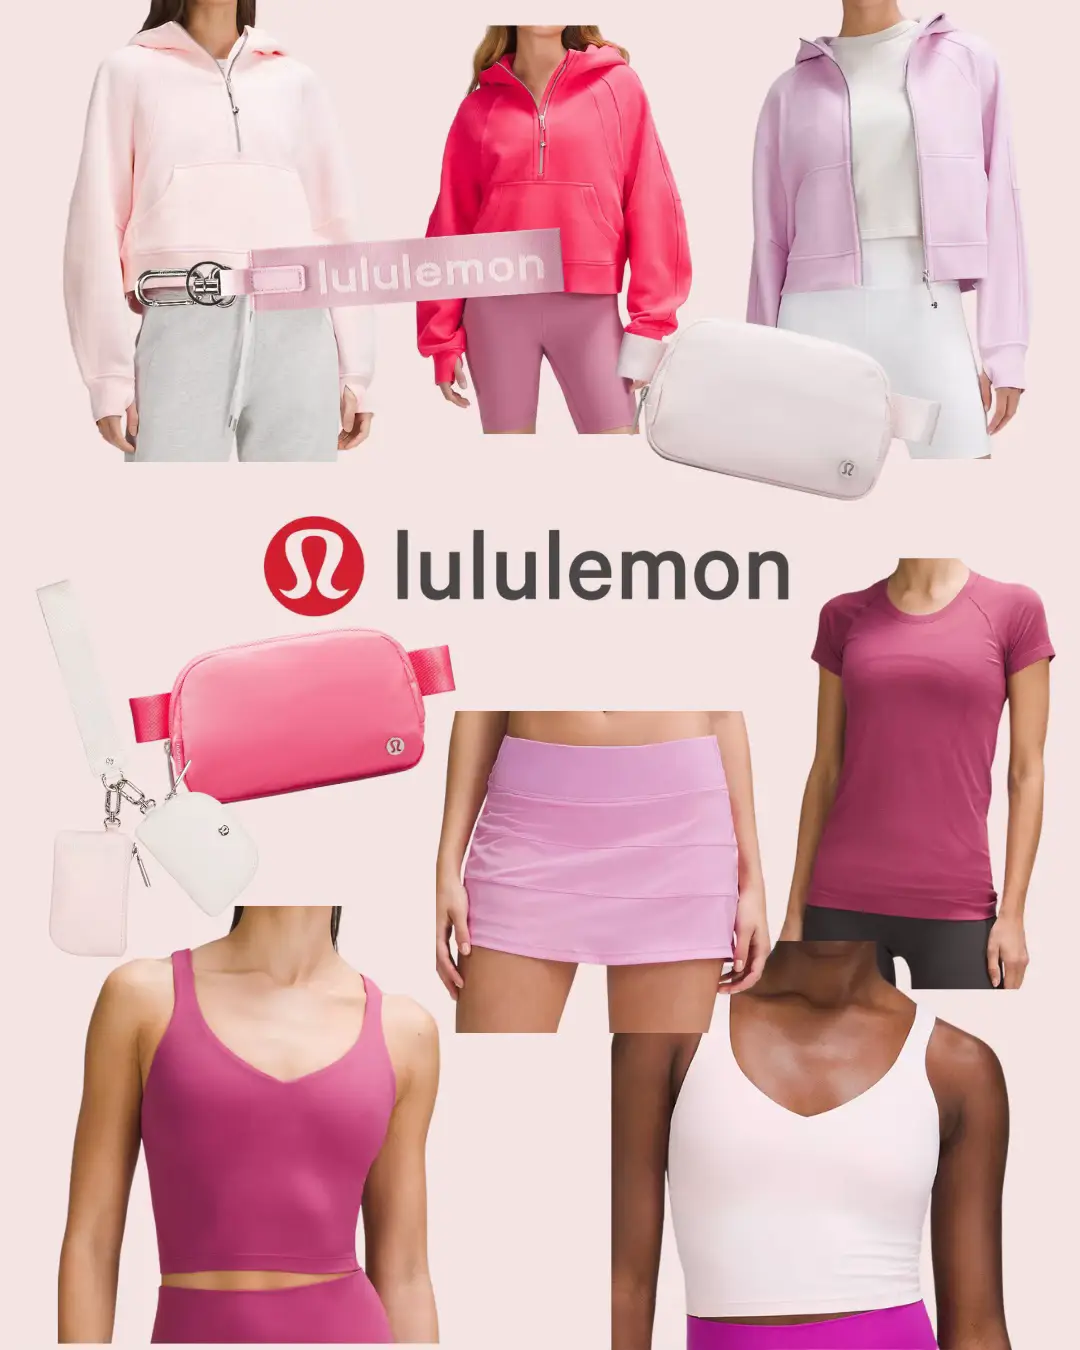 Lululemon Swiftly Tech shirt 2.0 NEW Strawberry Milkshake Color Size 4